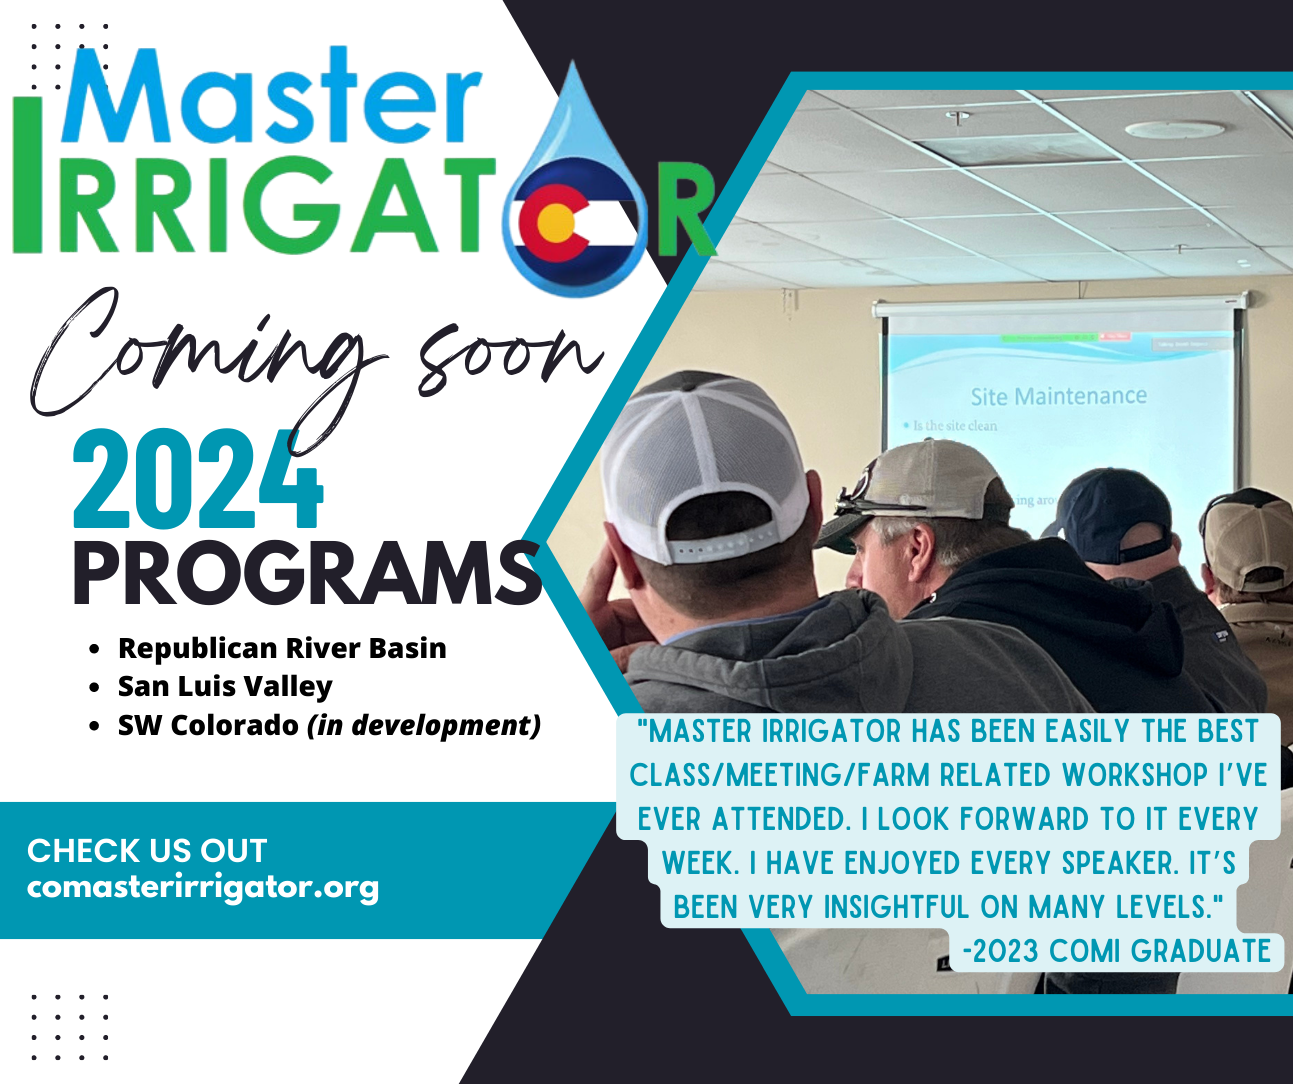 Colorado Master Irrigator flyer promoting upcoming 2024 programs in Republican River Basin and San Luis Valley